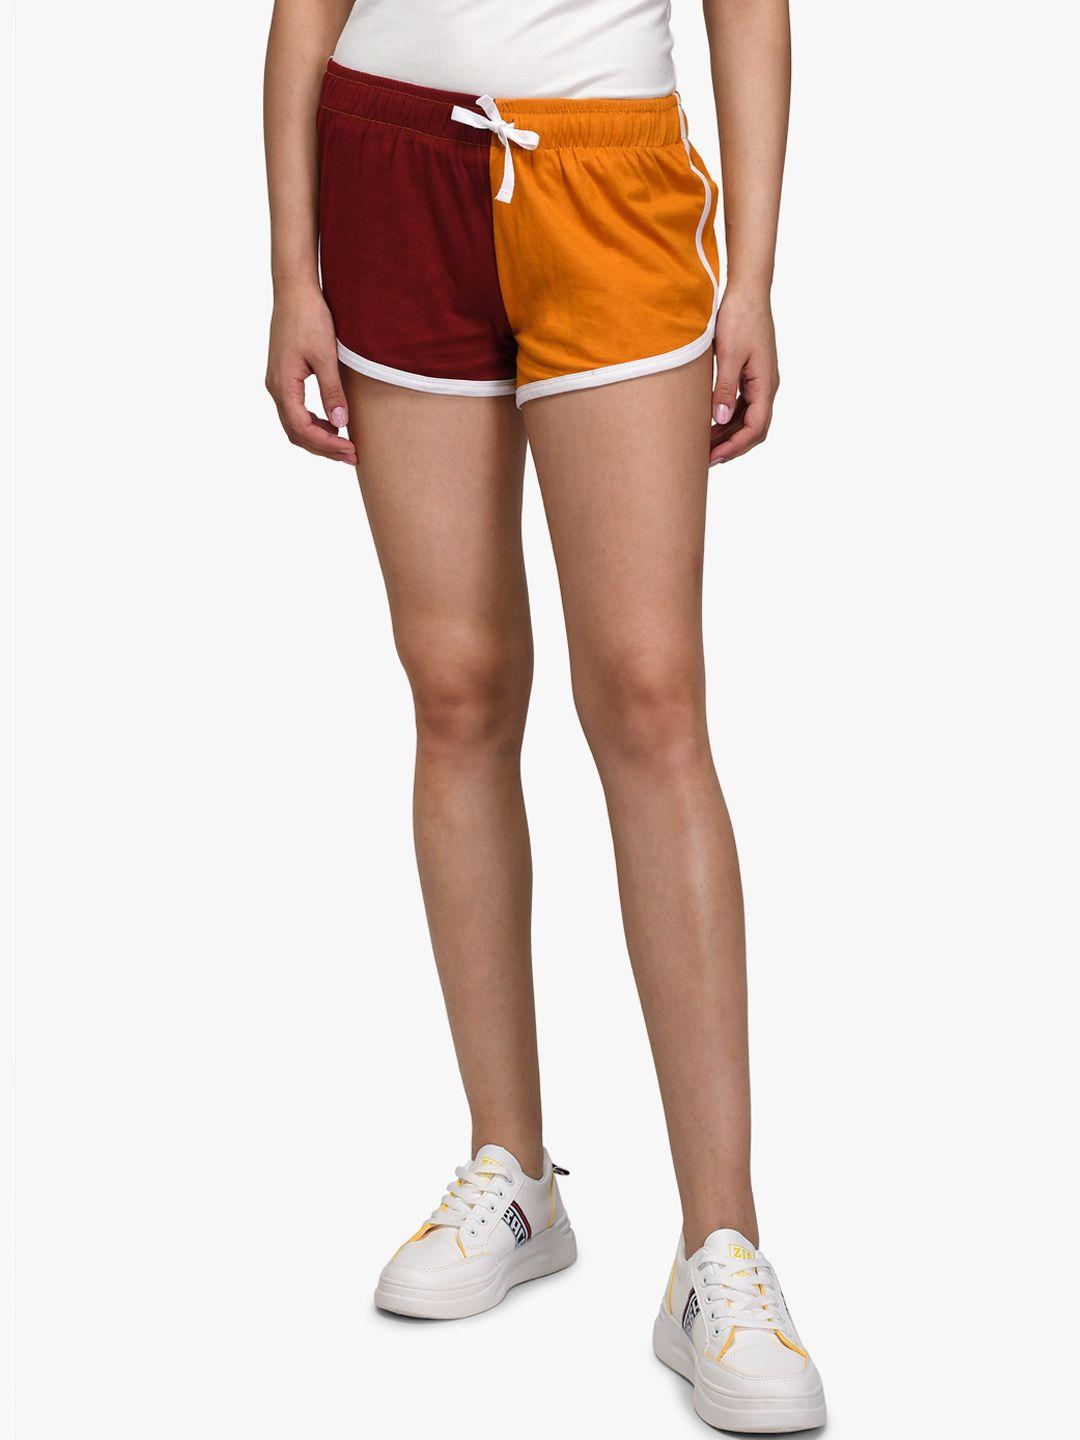 kotty women maroon & yellow colourblocked regular fit shorts